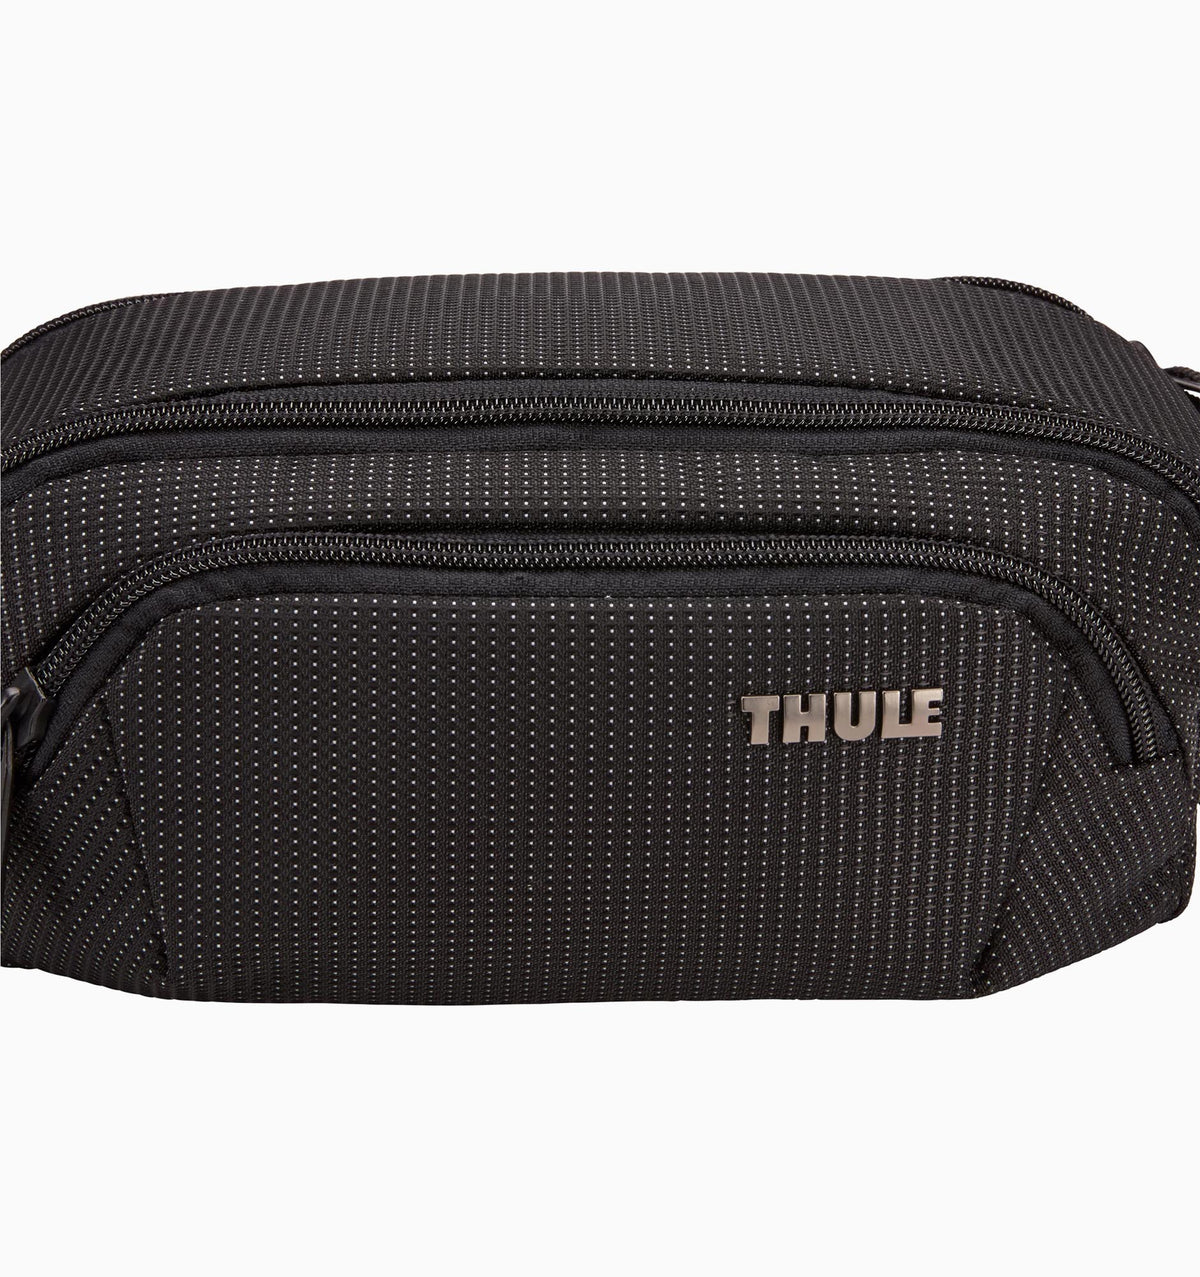 Thule - Crossover 2 Toiletry Bag - Black